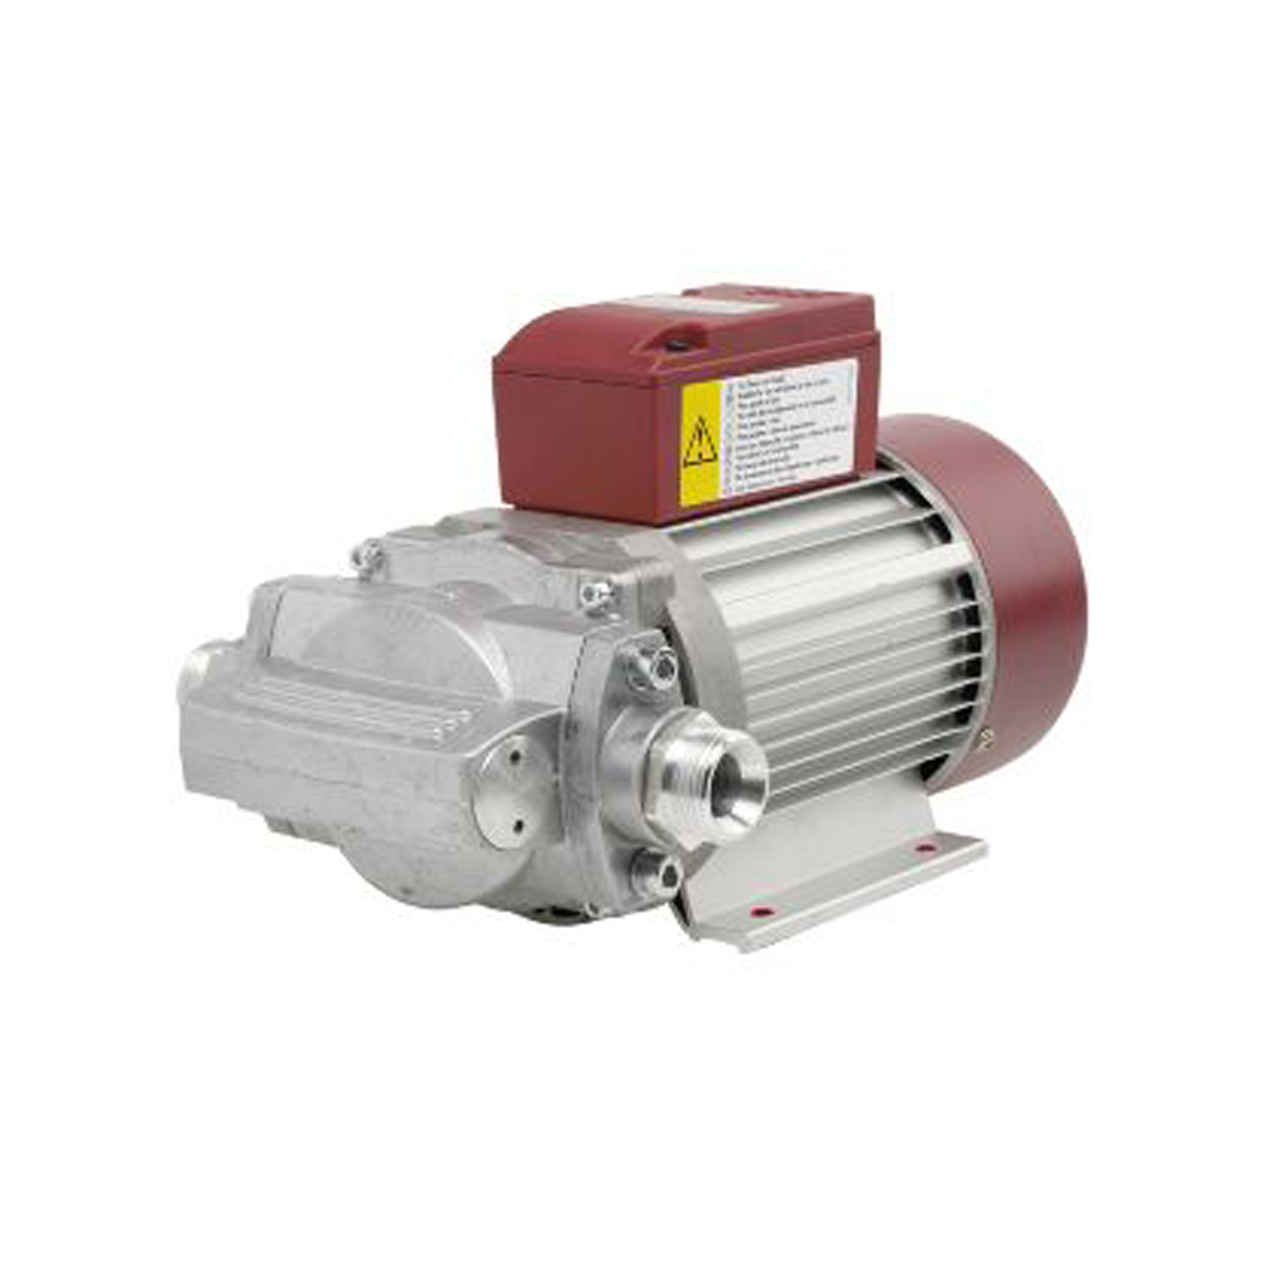 FMT Diesel Transfer Vane Pump 230V, 100lpm for Bio-diesel - Atkinson  Equipment Ltd